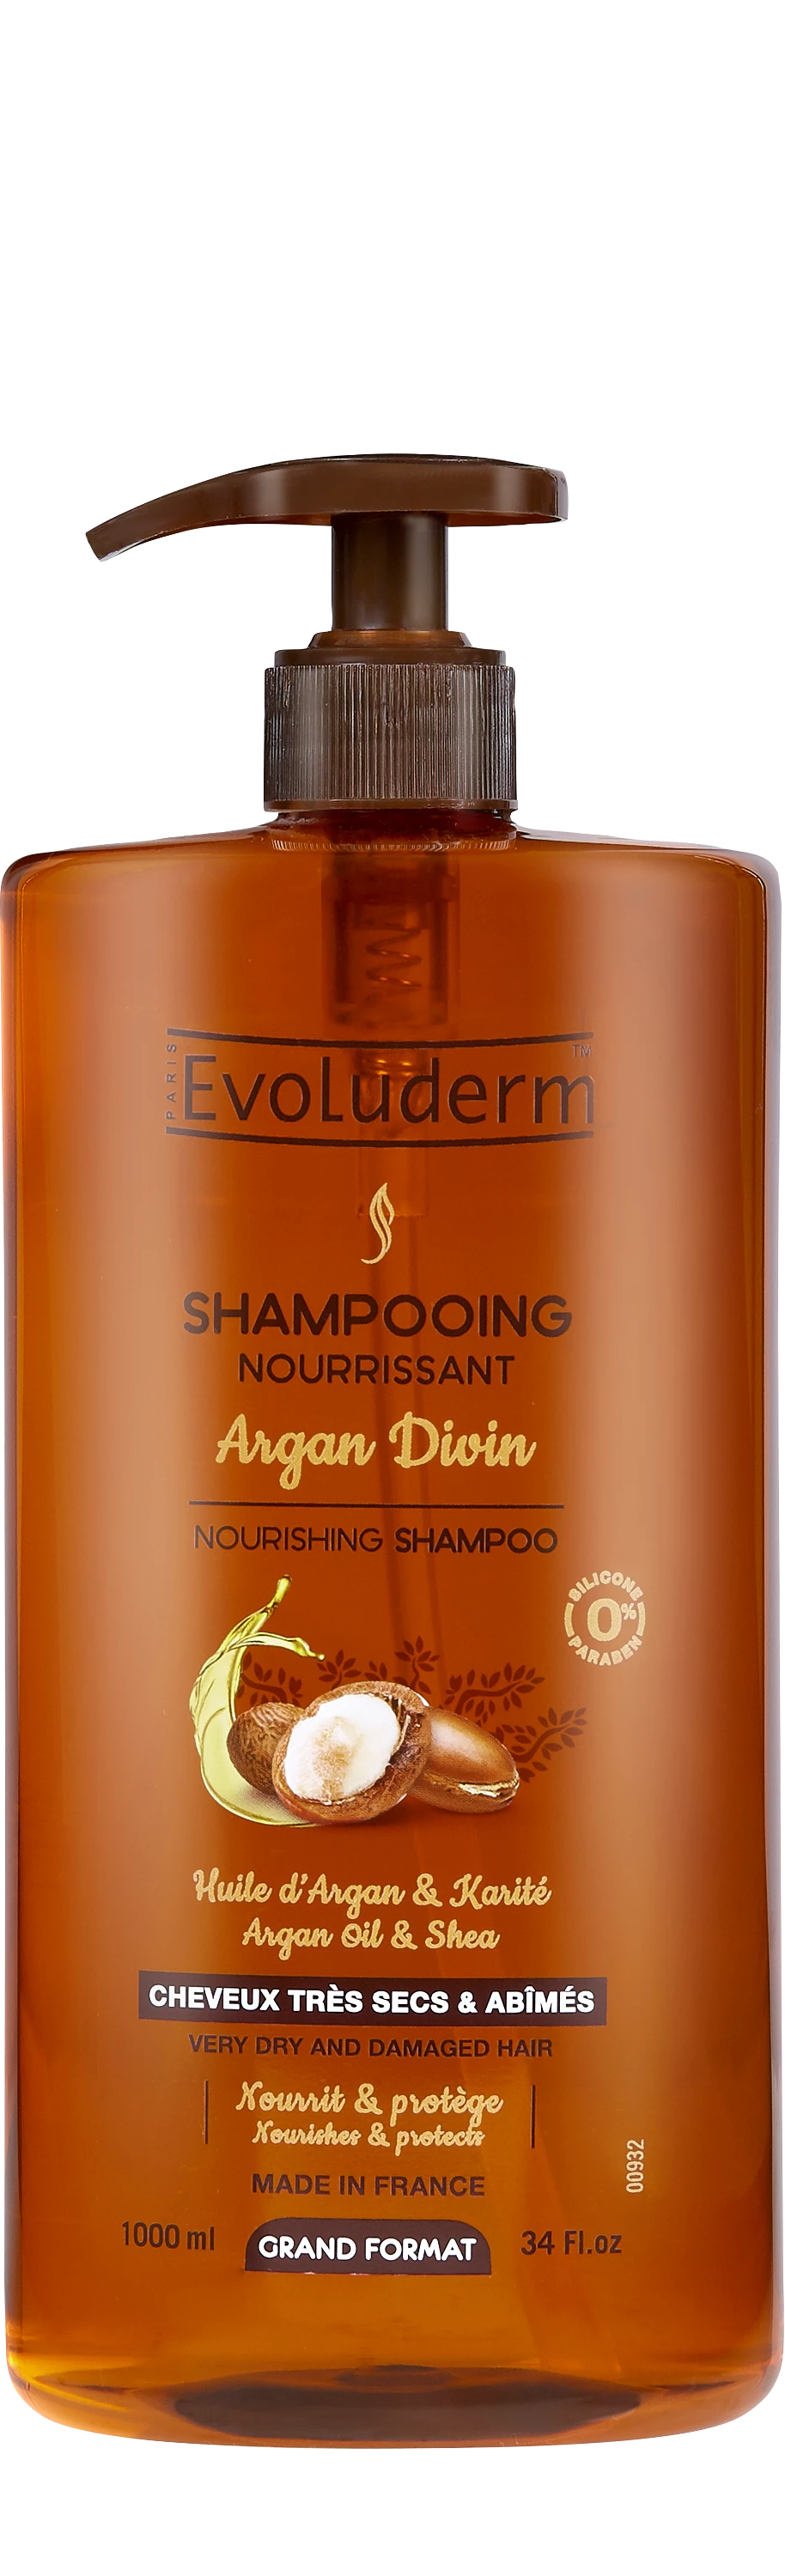 Shampooing Nourrissant Argan Divin 1l - Evoluderm